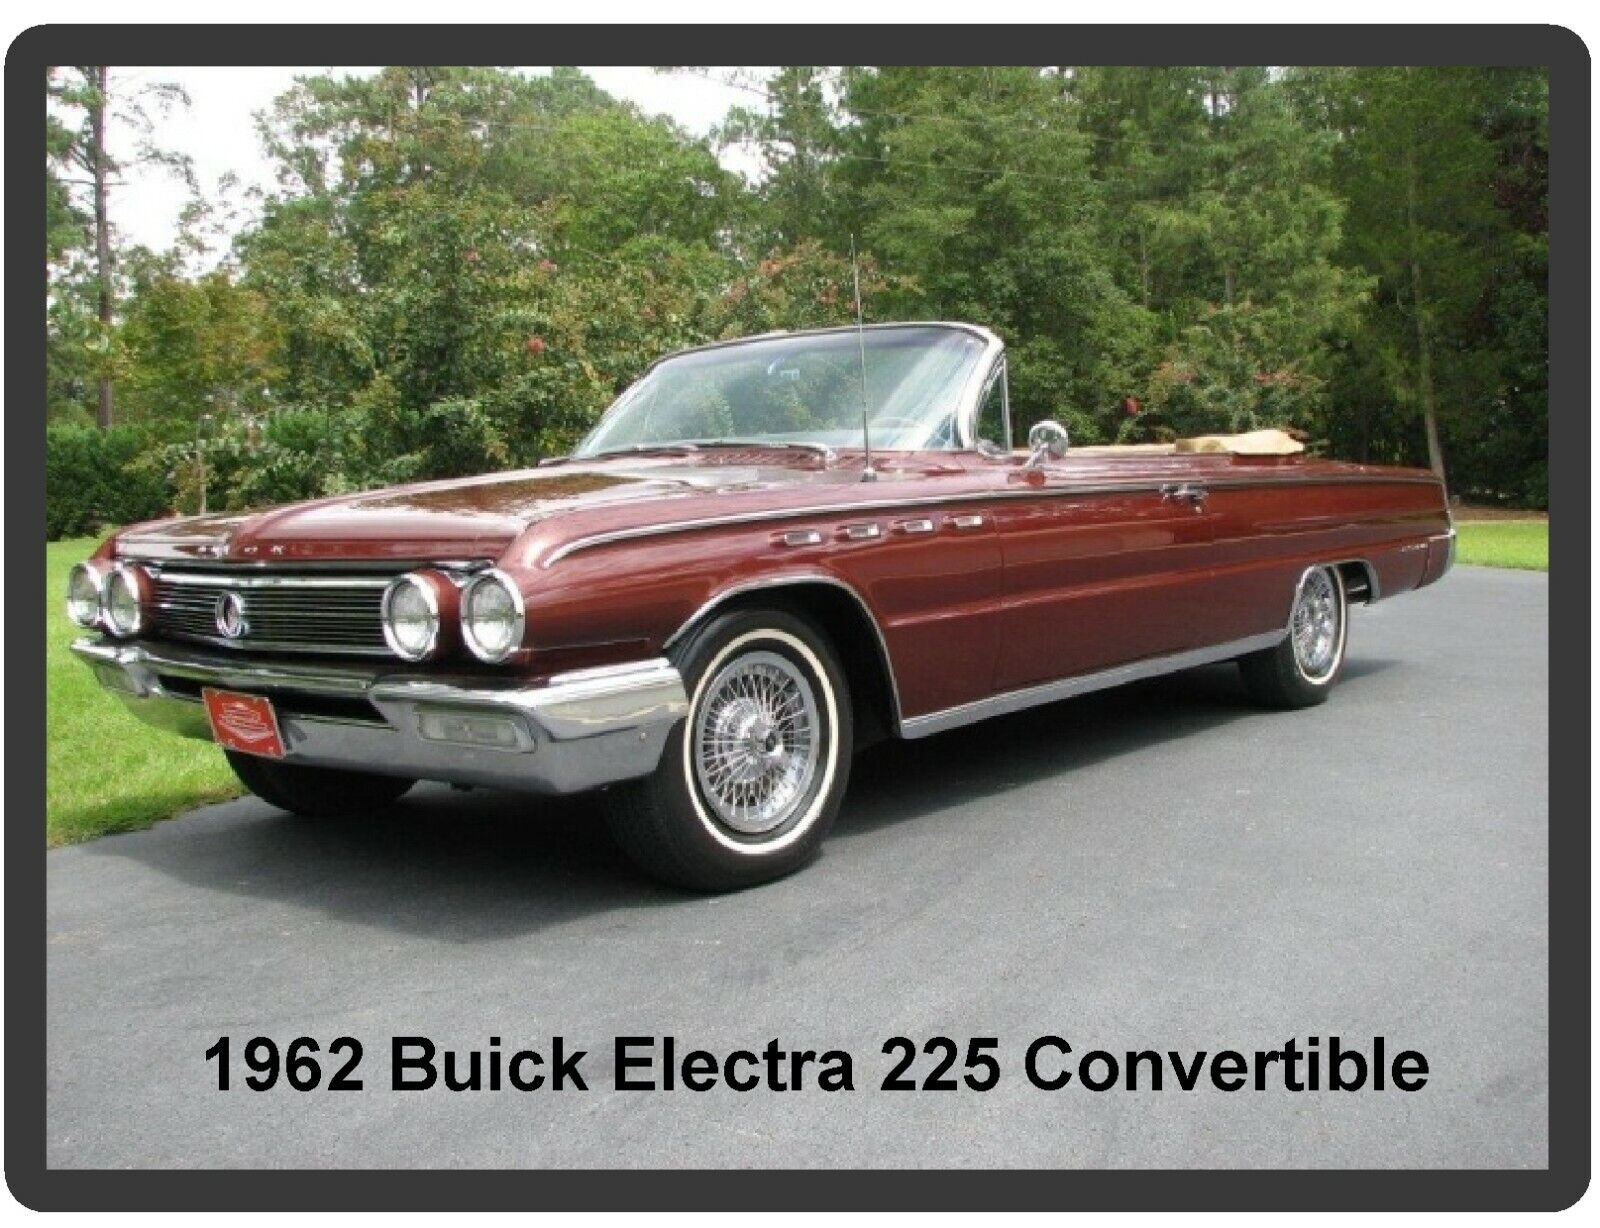 1962 Buick Electra 225 Convertible Refrigerator / Tool Box  Magnet